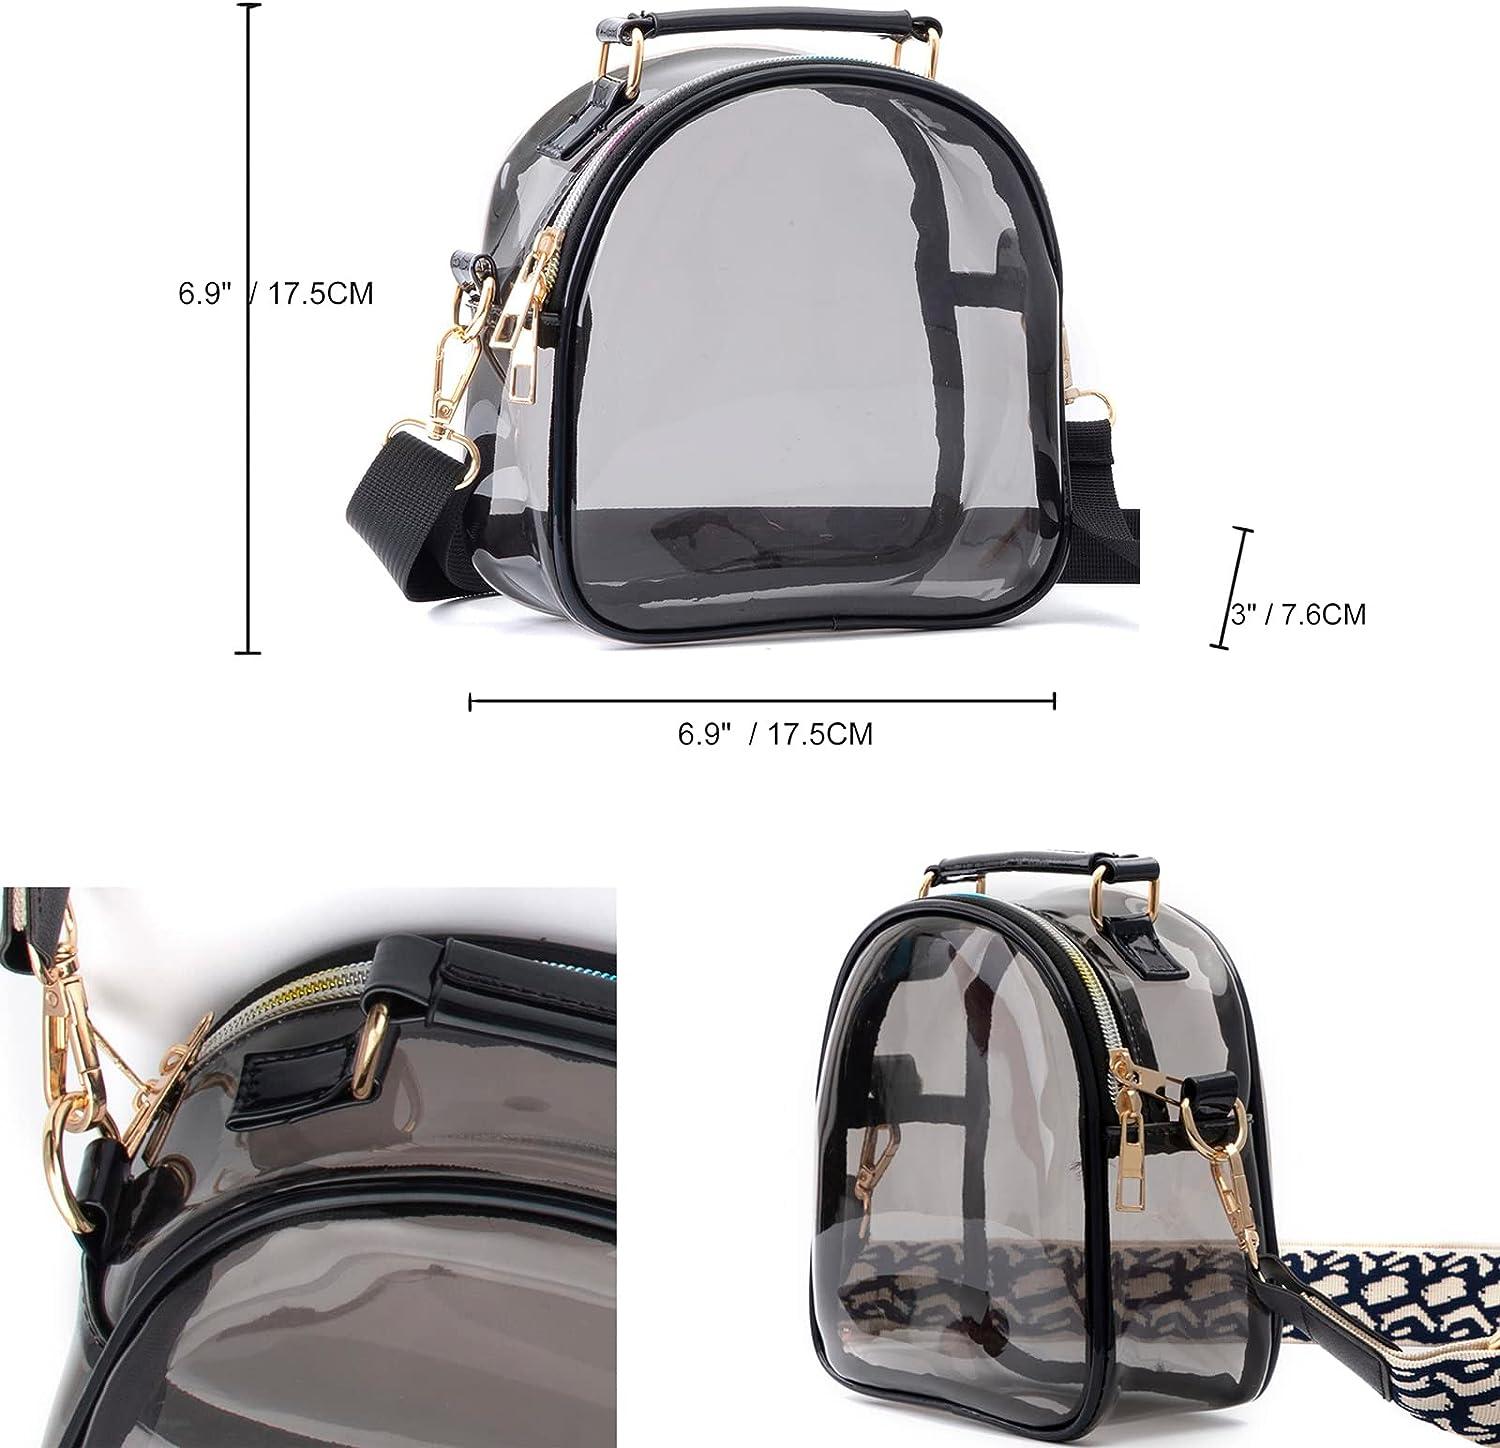 Clear Tote Bag with Zipper | Maui Babe, Inc.